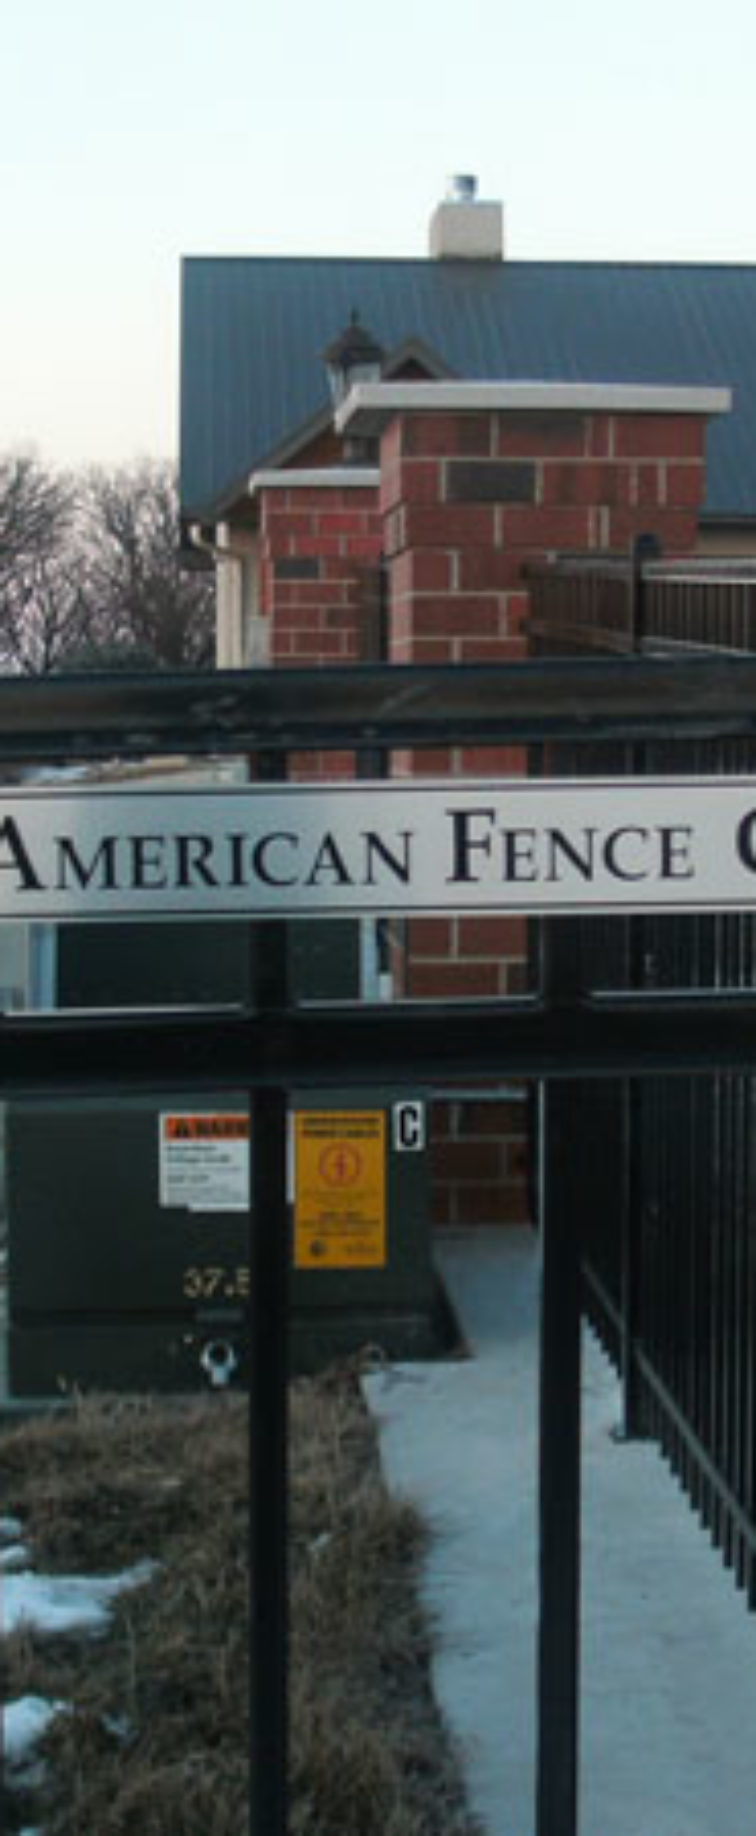 AmeriFence Corporation Wichita - Ornamental Fencing